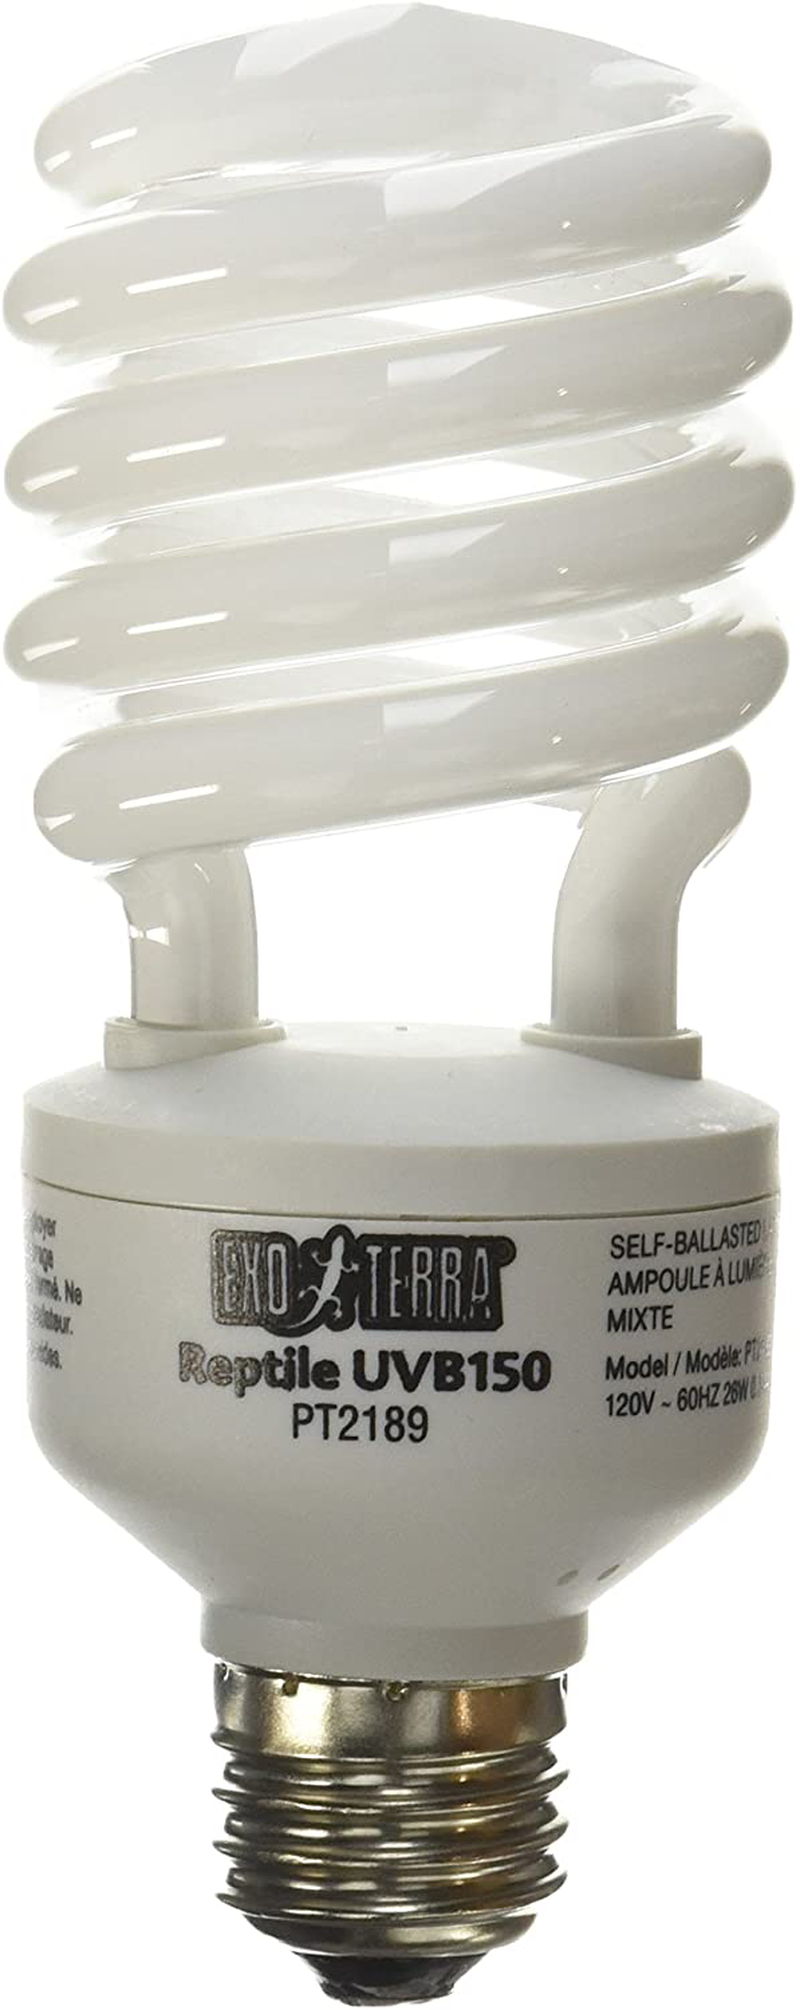 Exo Terra Repti-Glo 10.0 Compact Desert Terrarium Lamp, UVB Light Bulb for Reptiles, PT2189